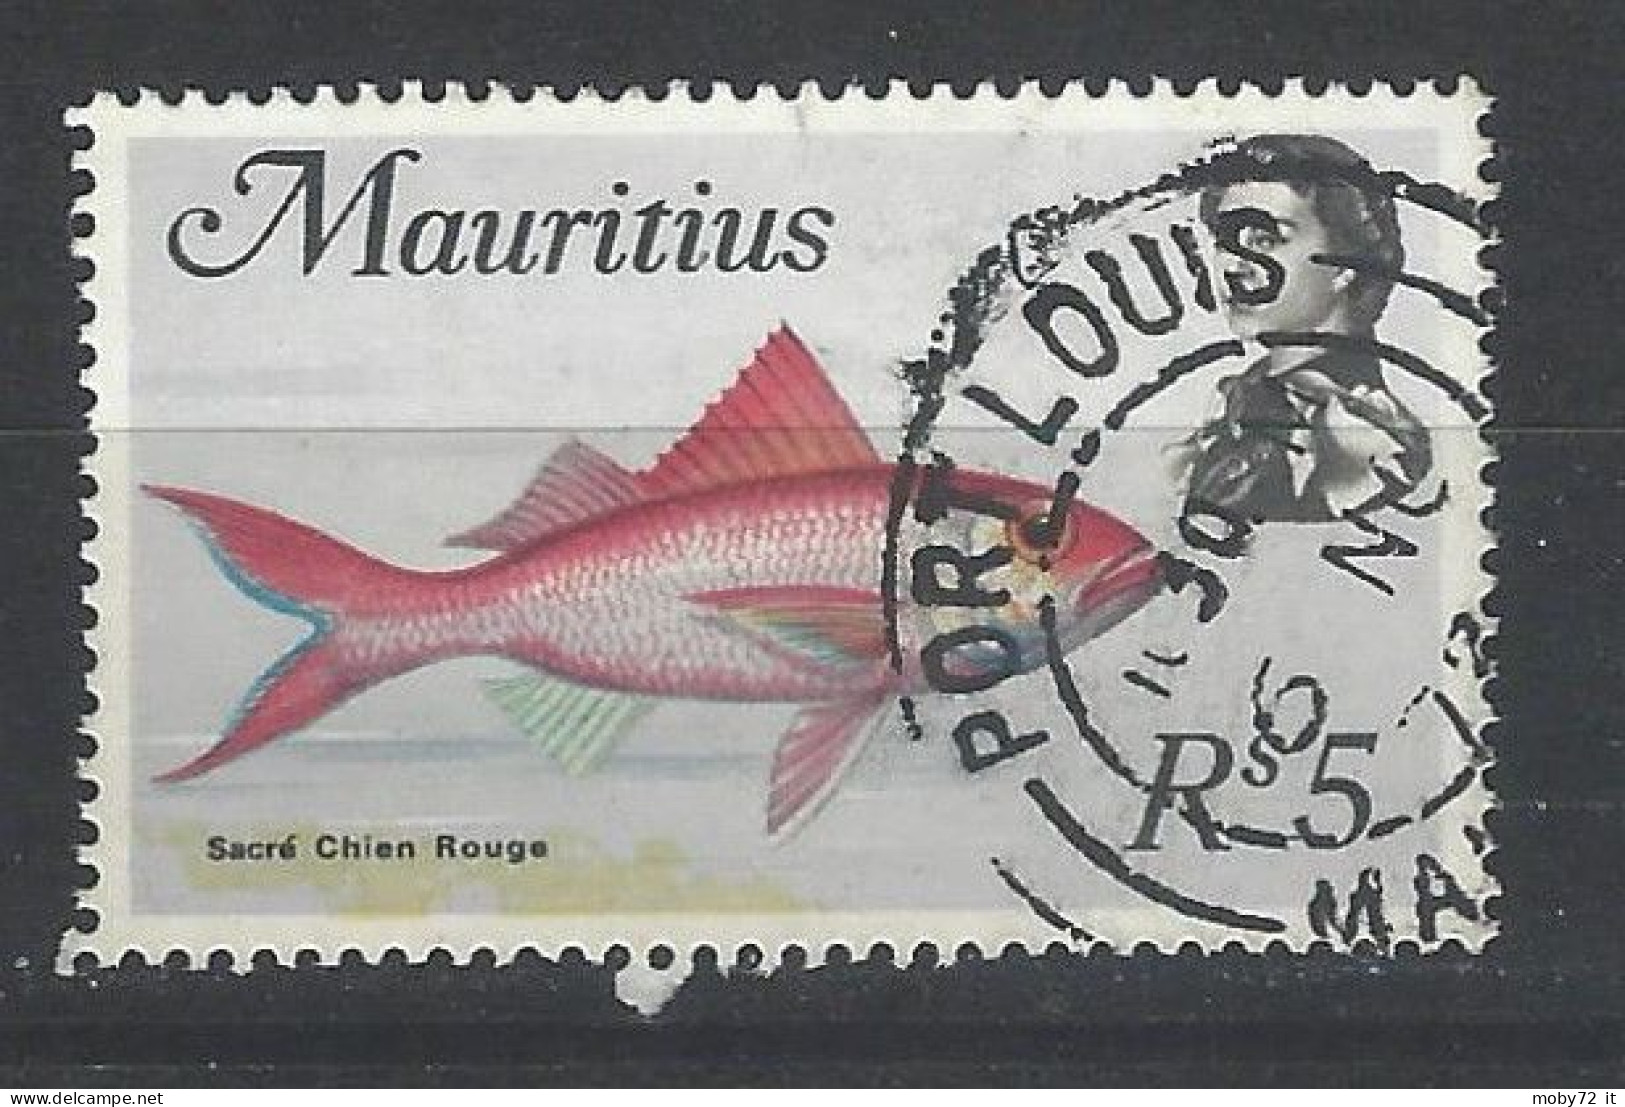 Mauritius - 1969 - Usato/used - Fish - Mi N. 347 - Maurice (1968-...)